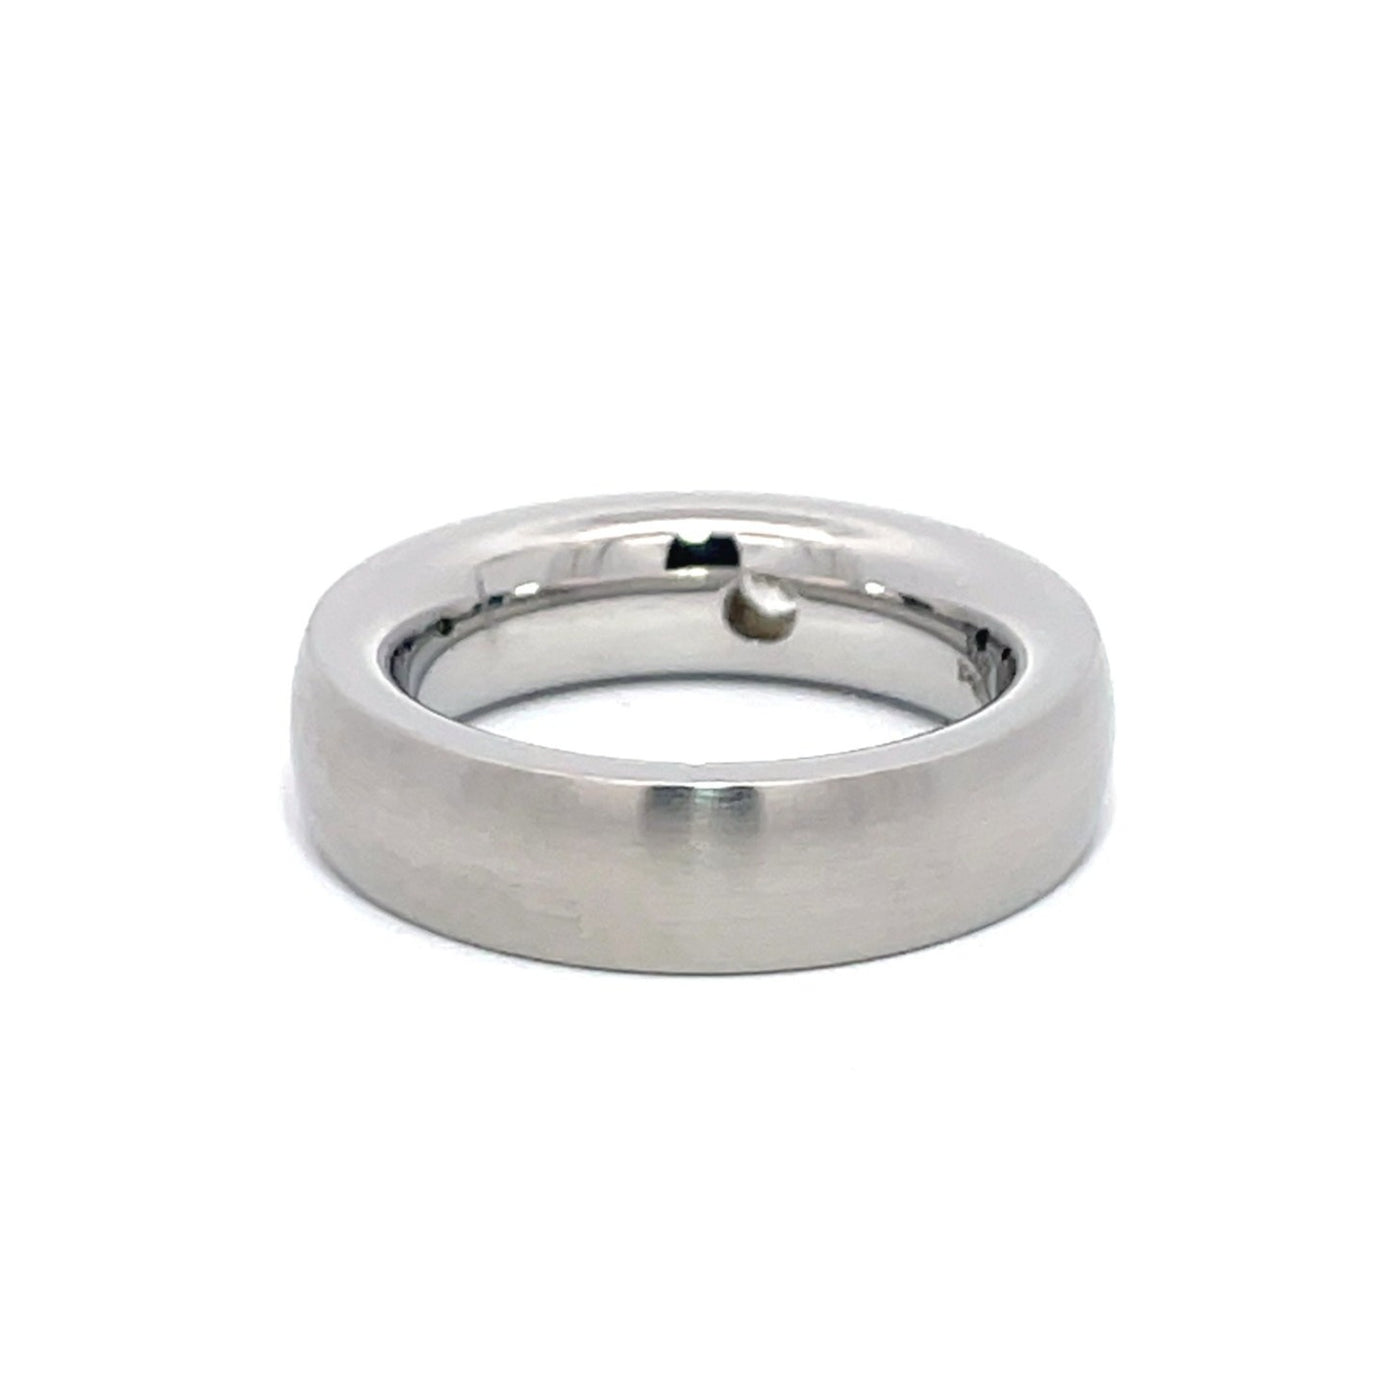 6mm Stainless Steel Flush Set Single Diamond Ring - Size O